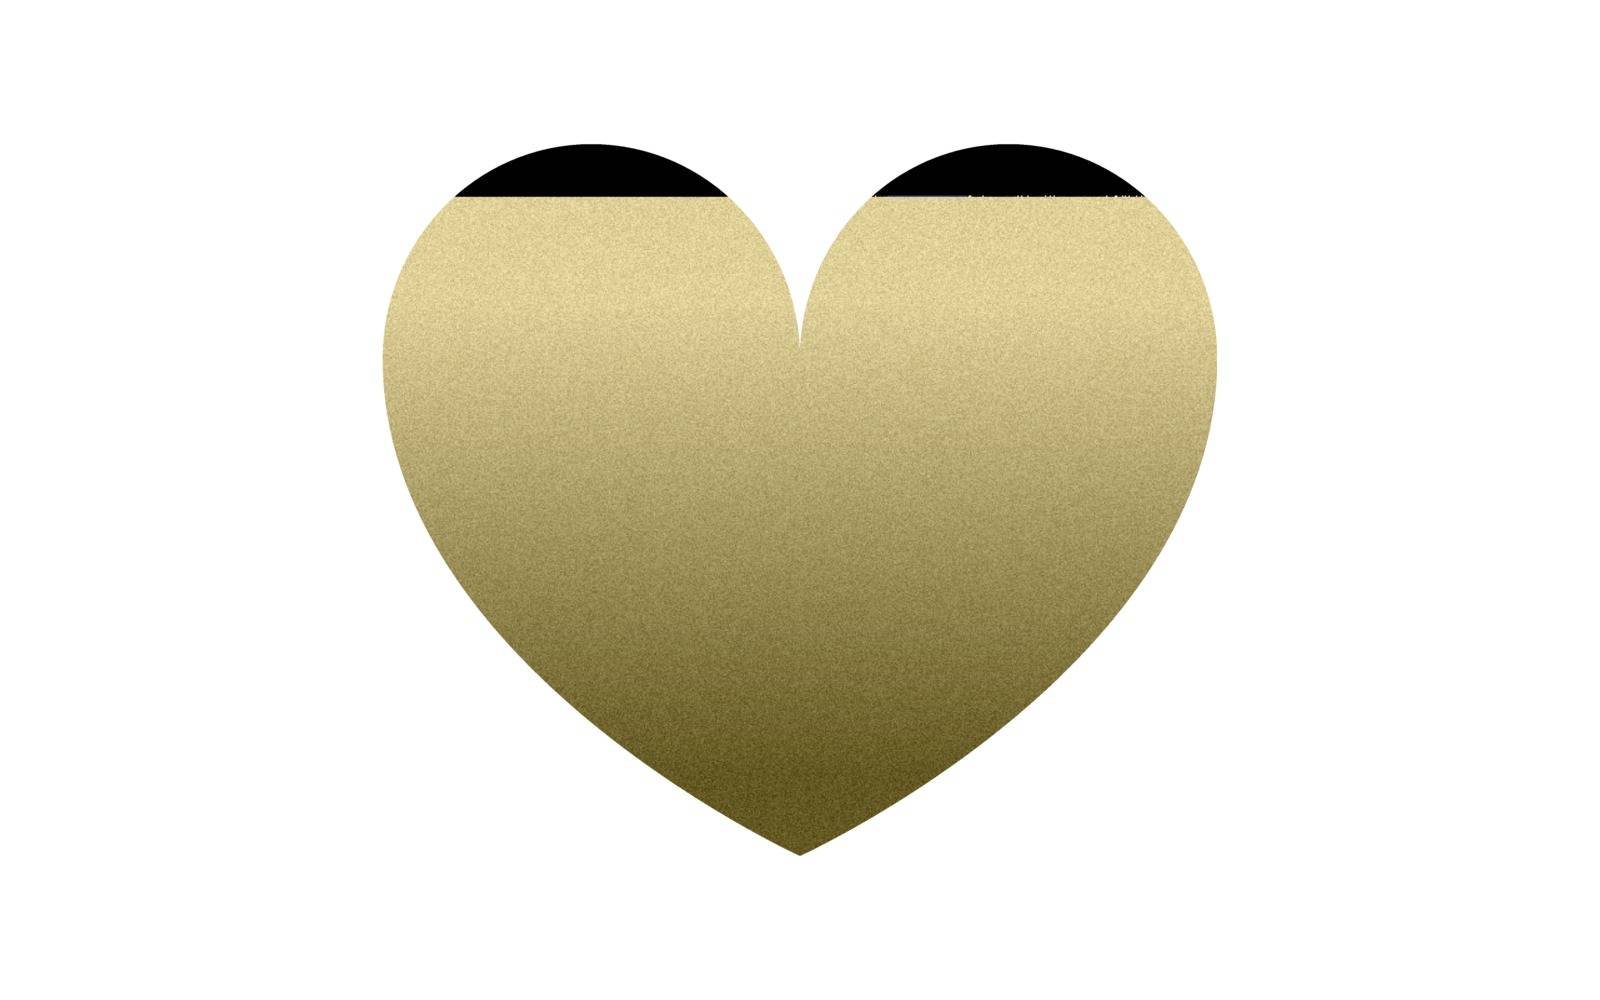 An illustration of a golden heart with a glitter texture